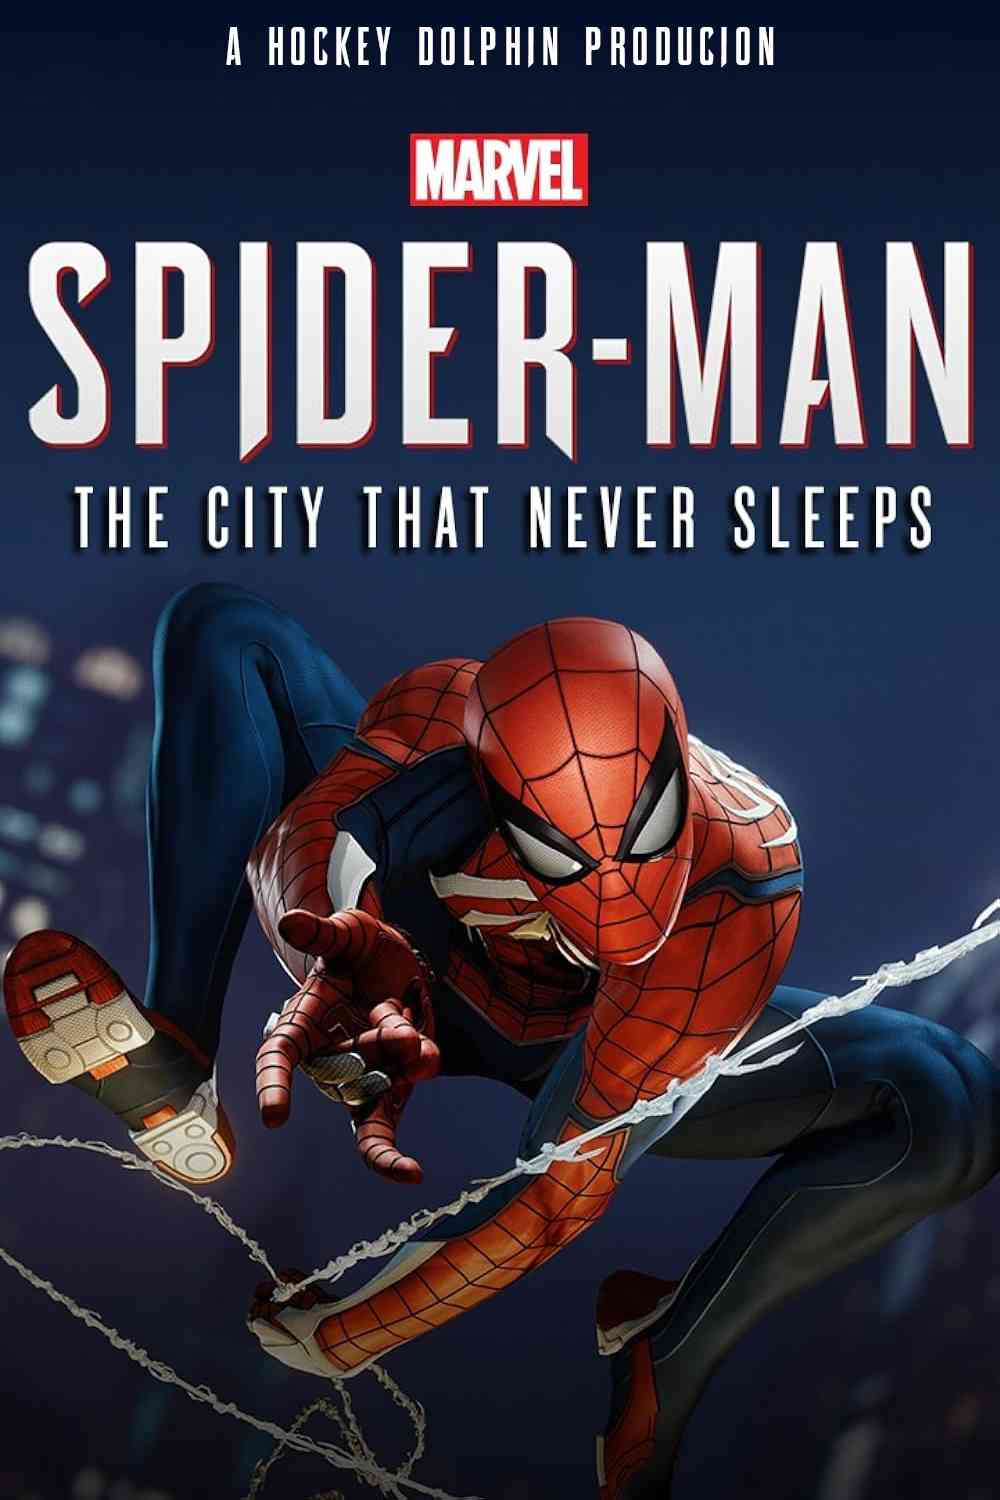 Spider-Man (Playstation): Season 2 - The City That Never Sleeps